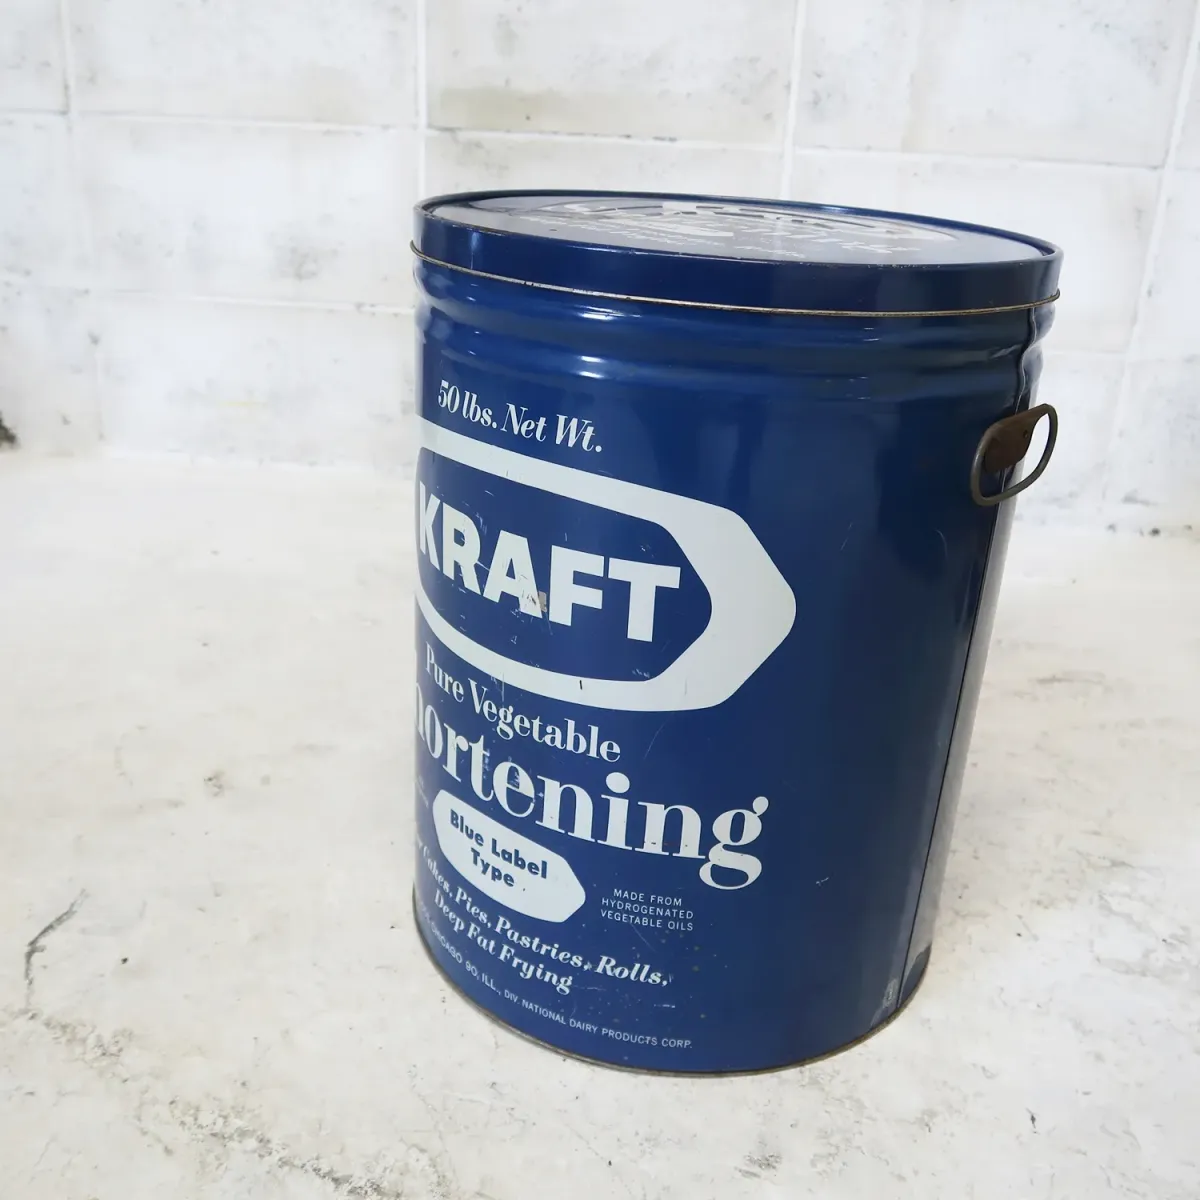 KRAFT ビンテージ ショートニング缶